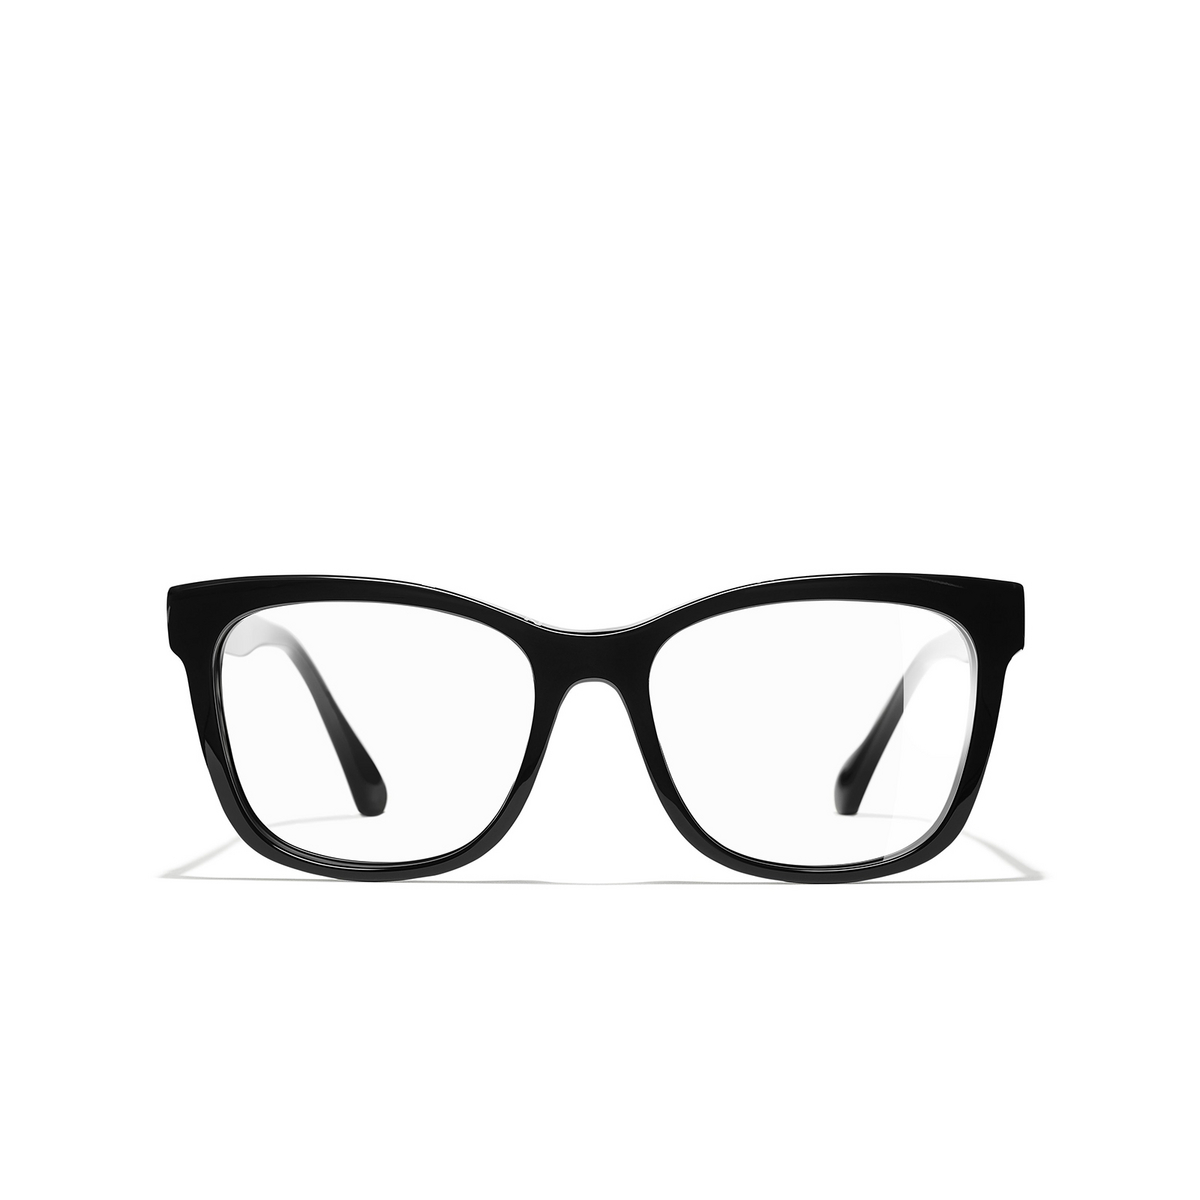 CHANEL square Eyeglasses C501 Black - front view